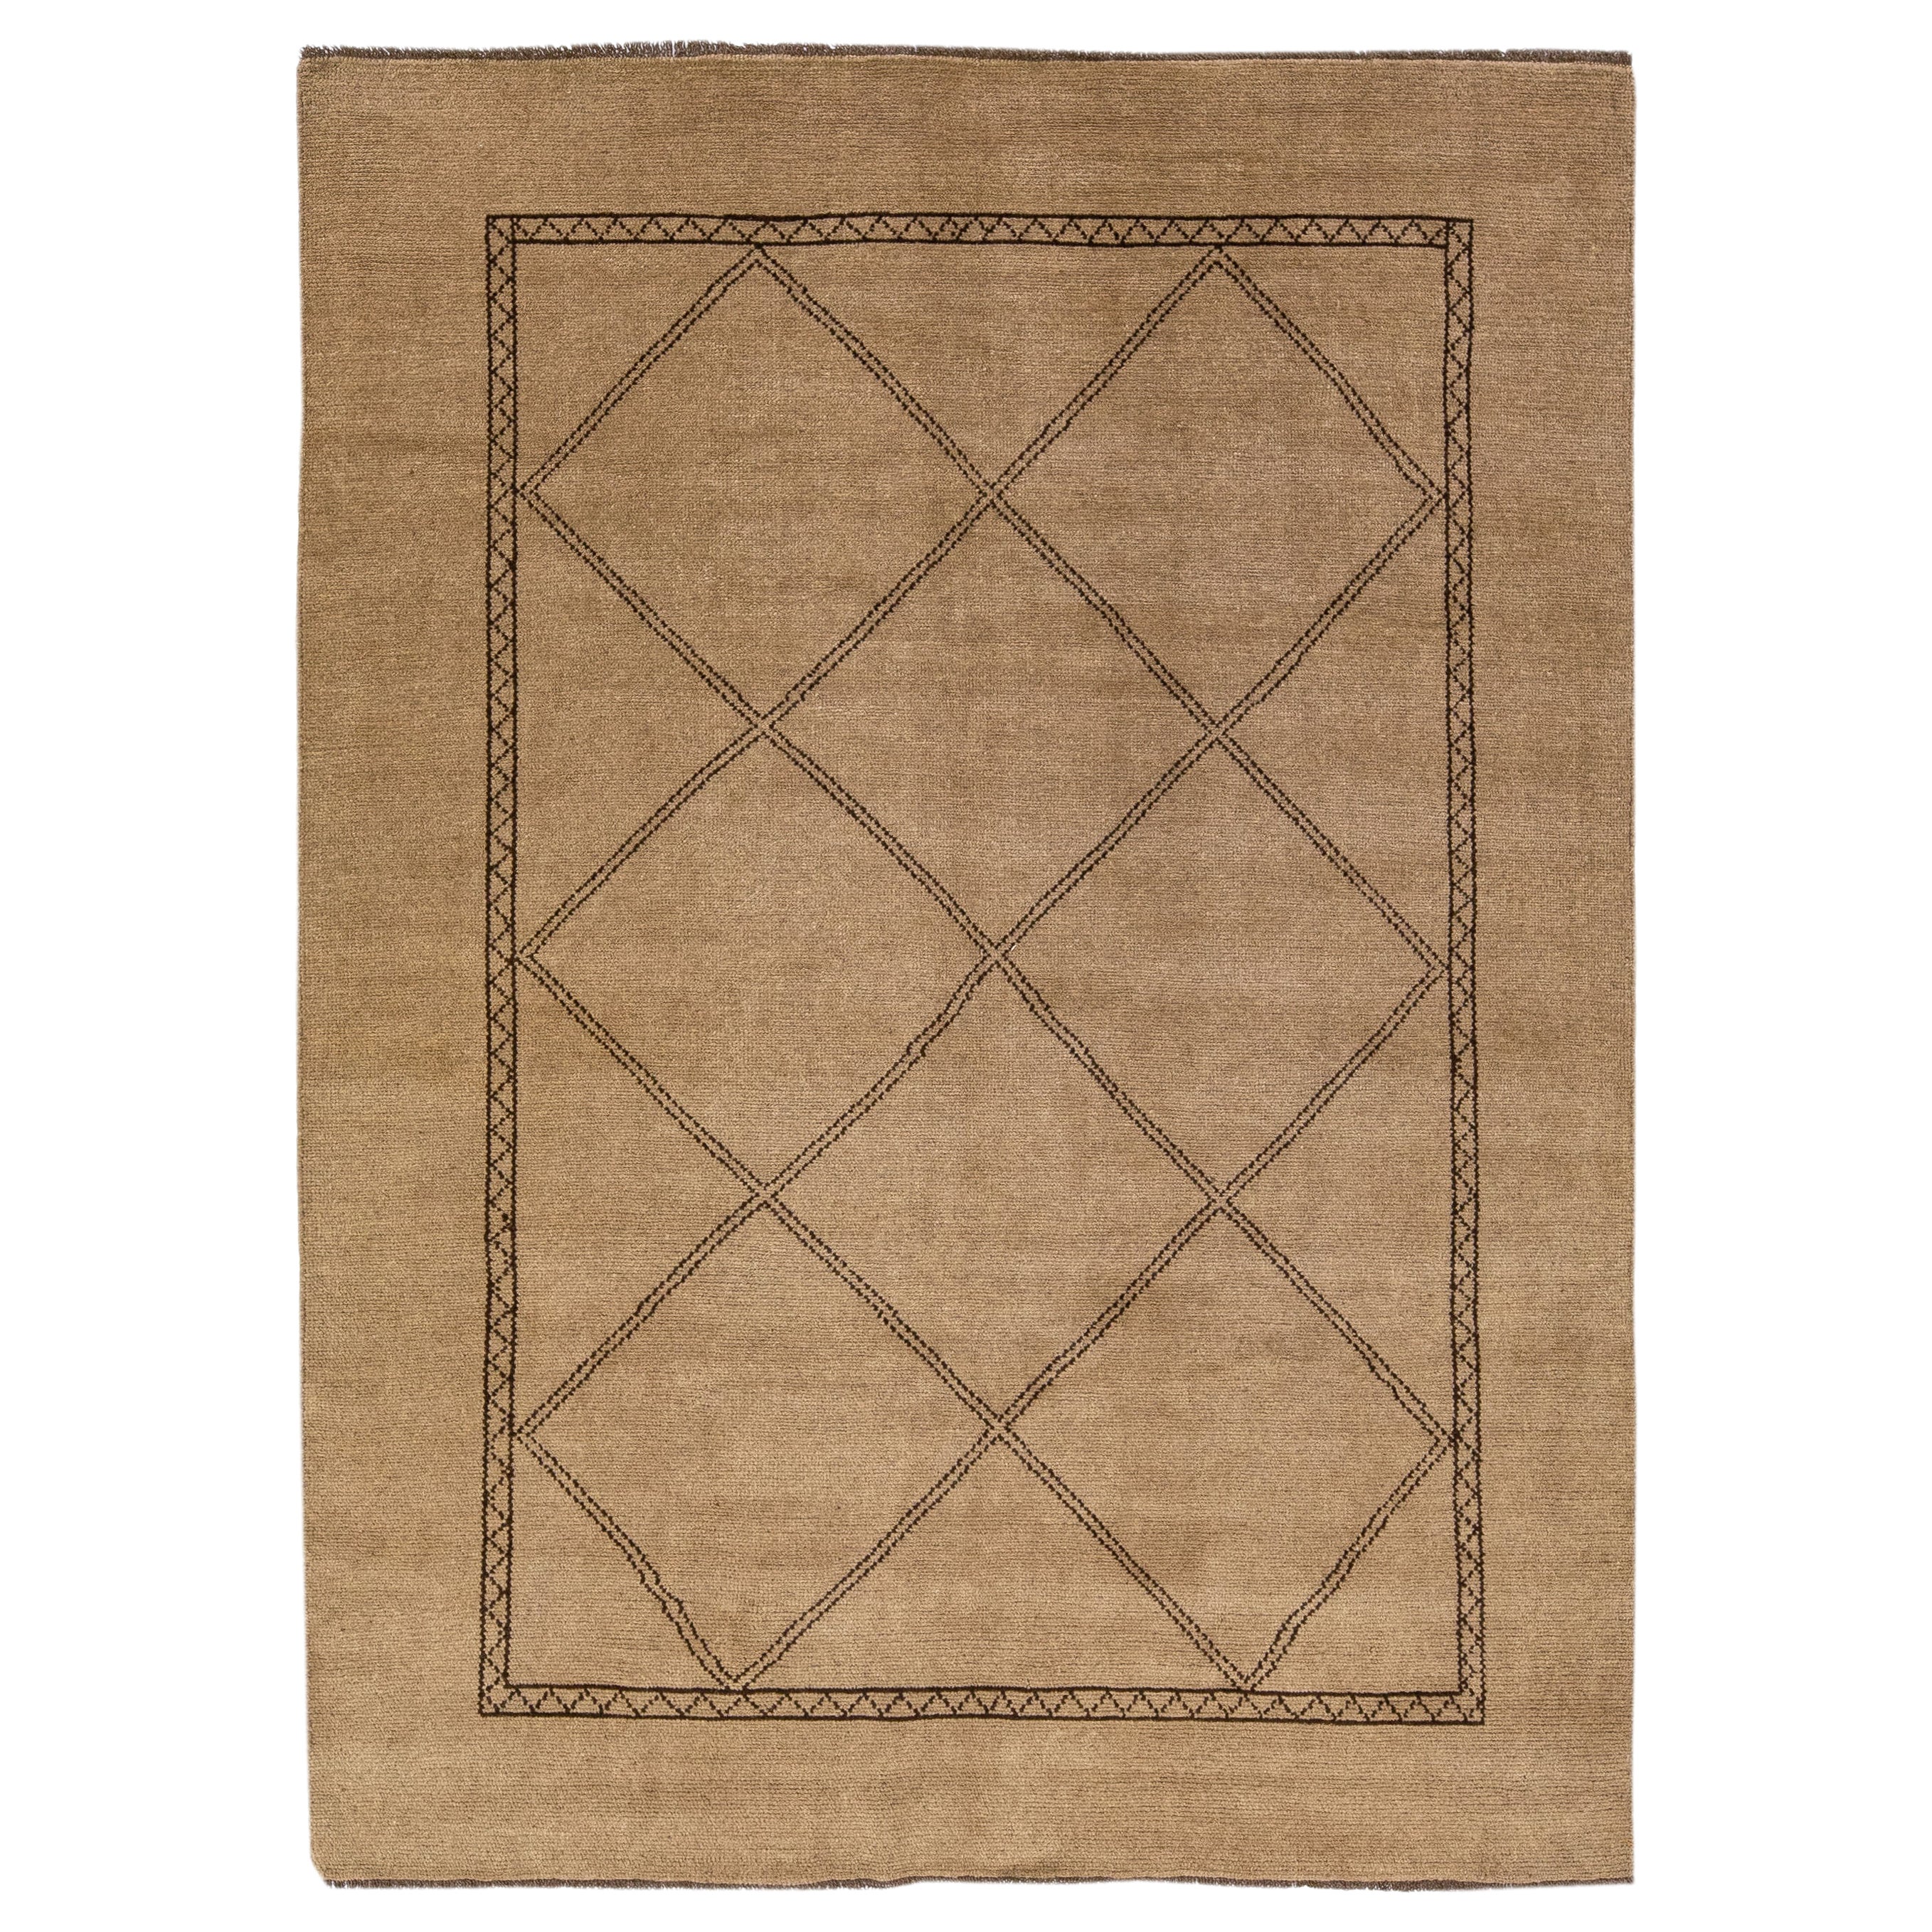 Modern Moroccan Style Handmade Brown Wool Rug with Geometric Motif by Apadana